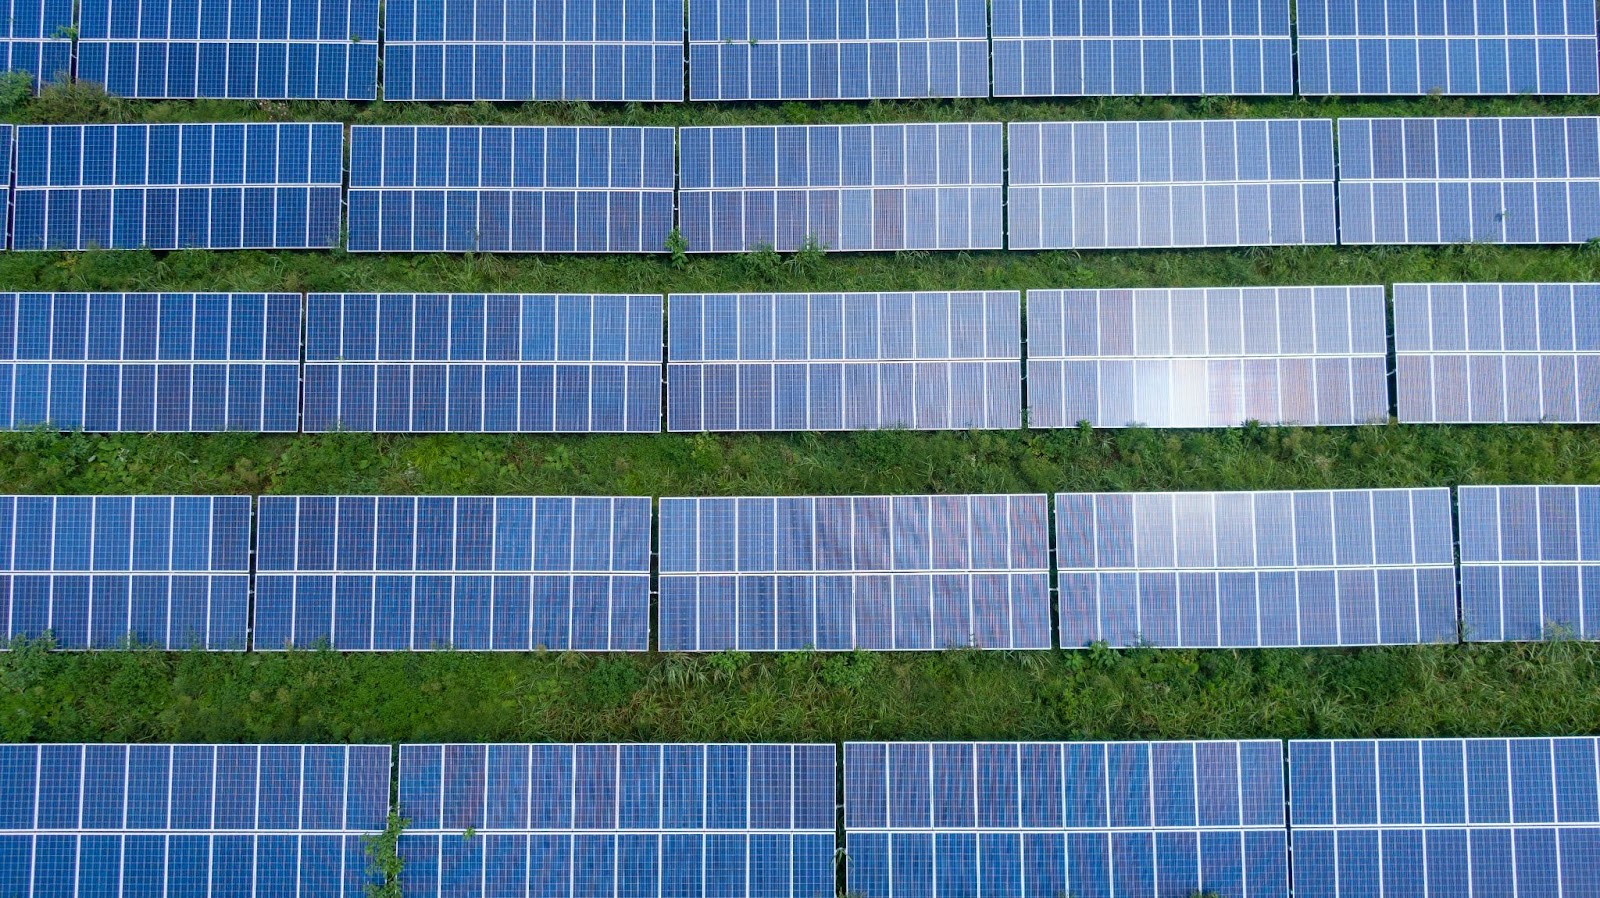  solar panels in Series vs. Parallel